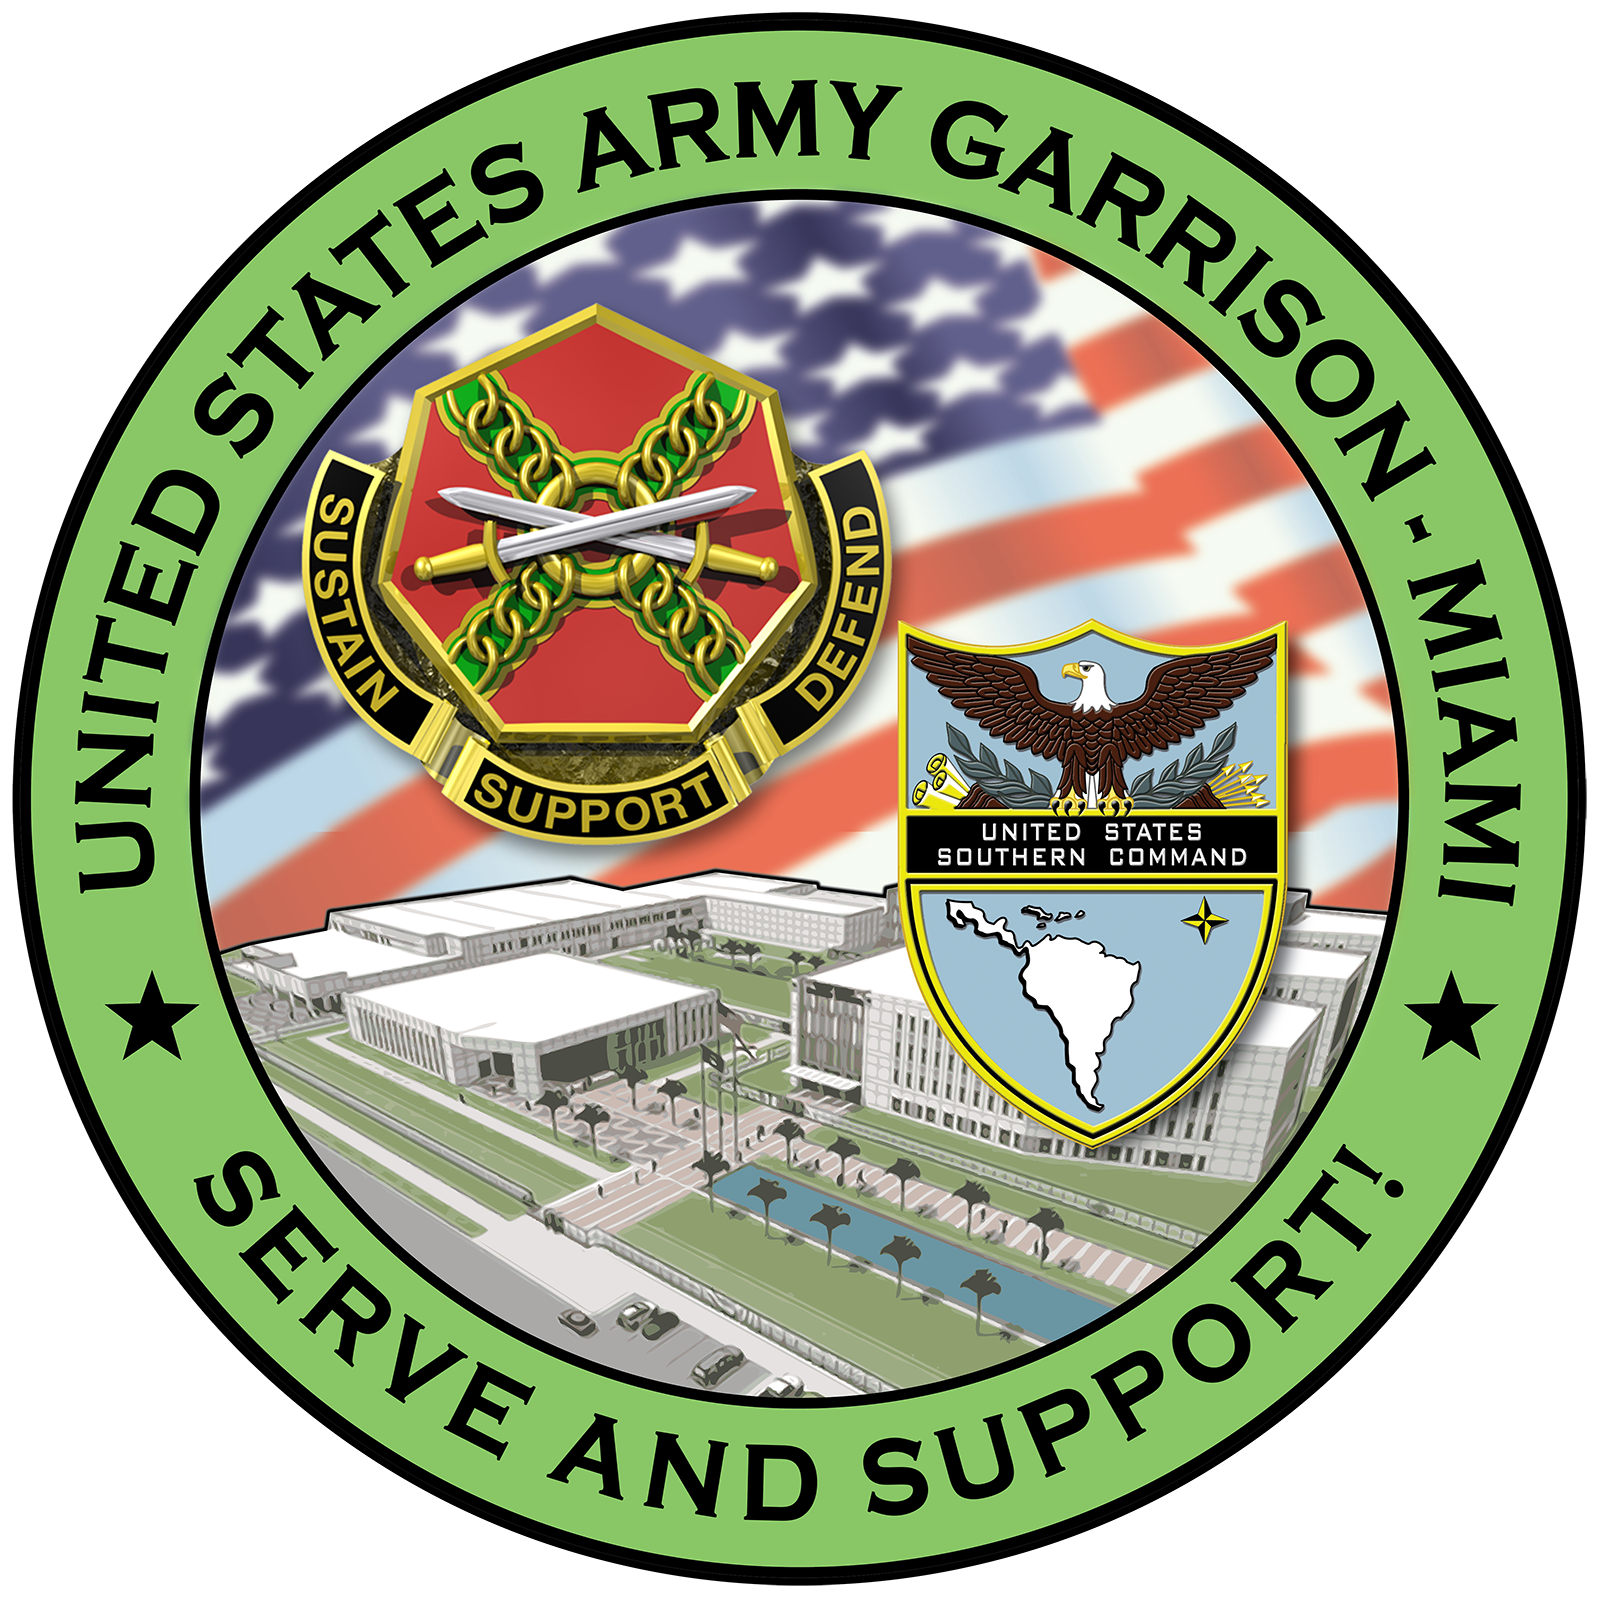 U.S. Army Garrison Miami official command logo